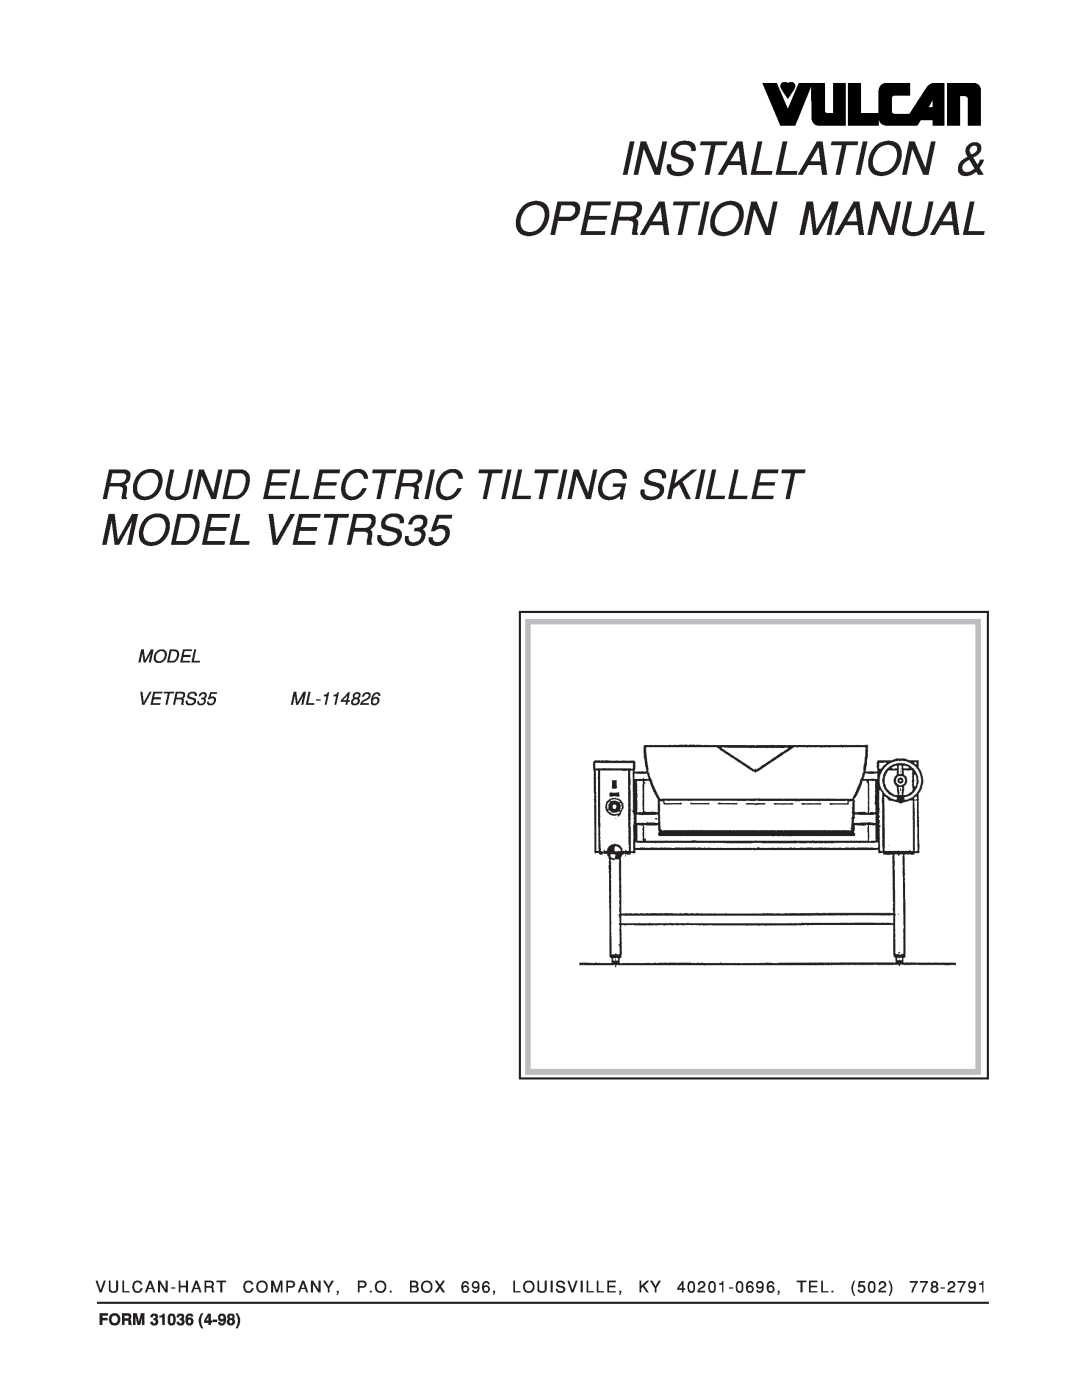 Vulcan-Hart operation manual Round Electric Tilting Skillet, MODEL VETRS35 ML-114826, Form 